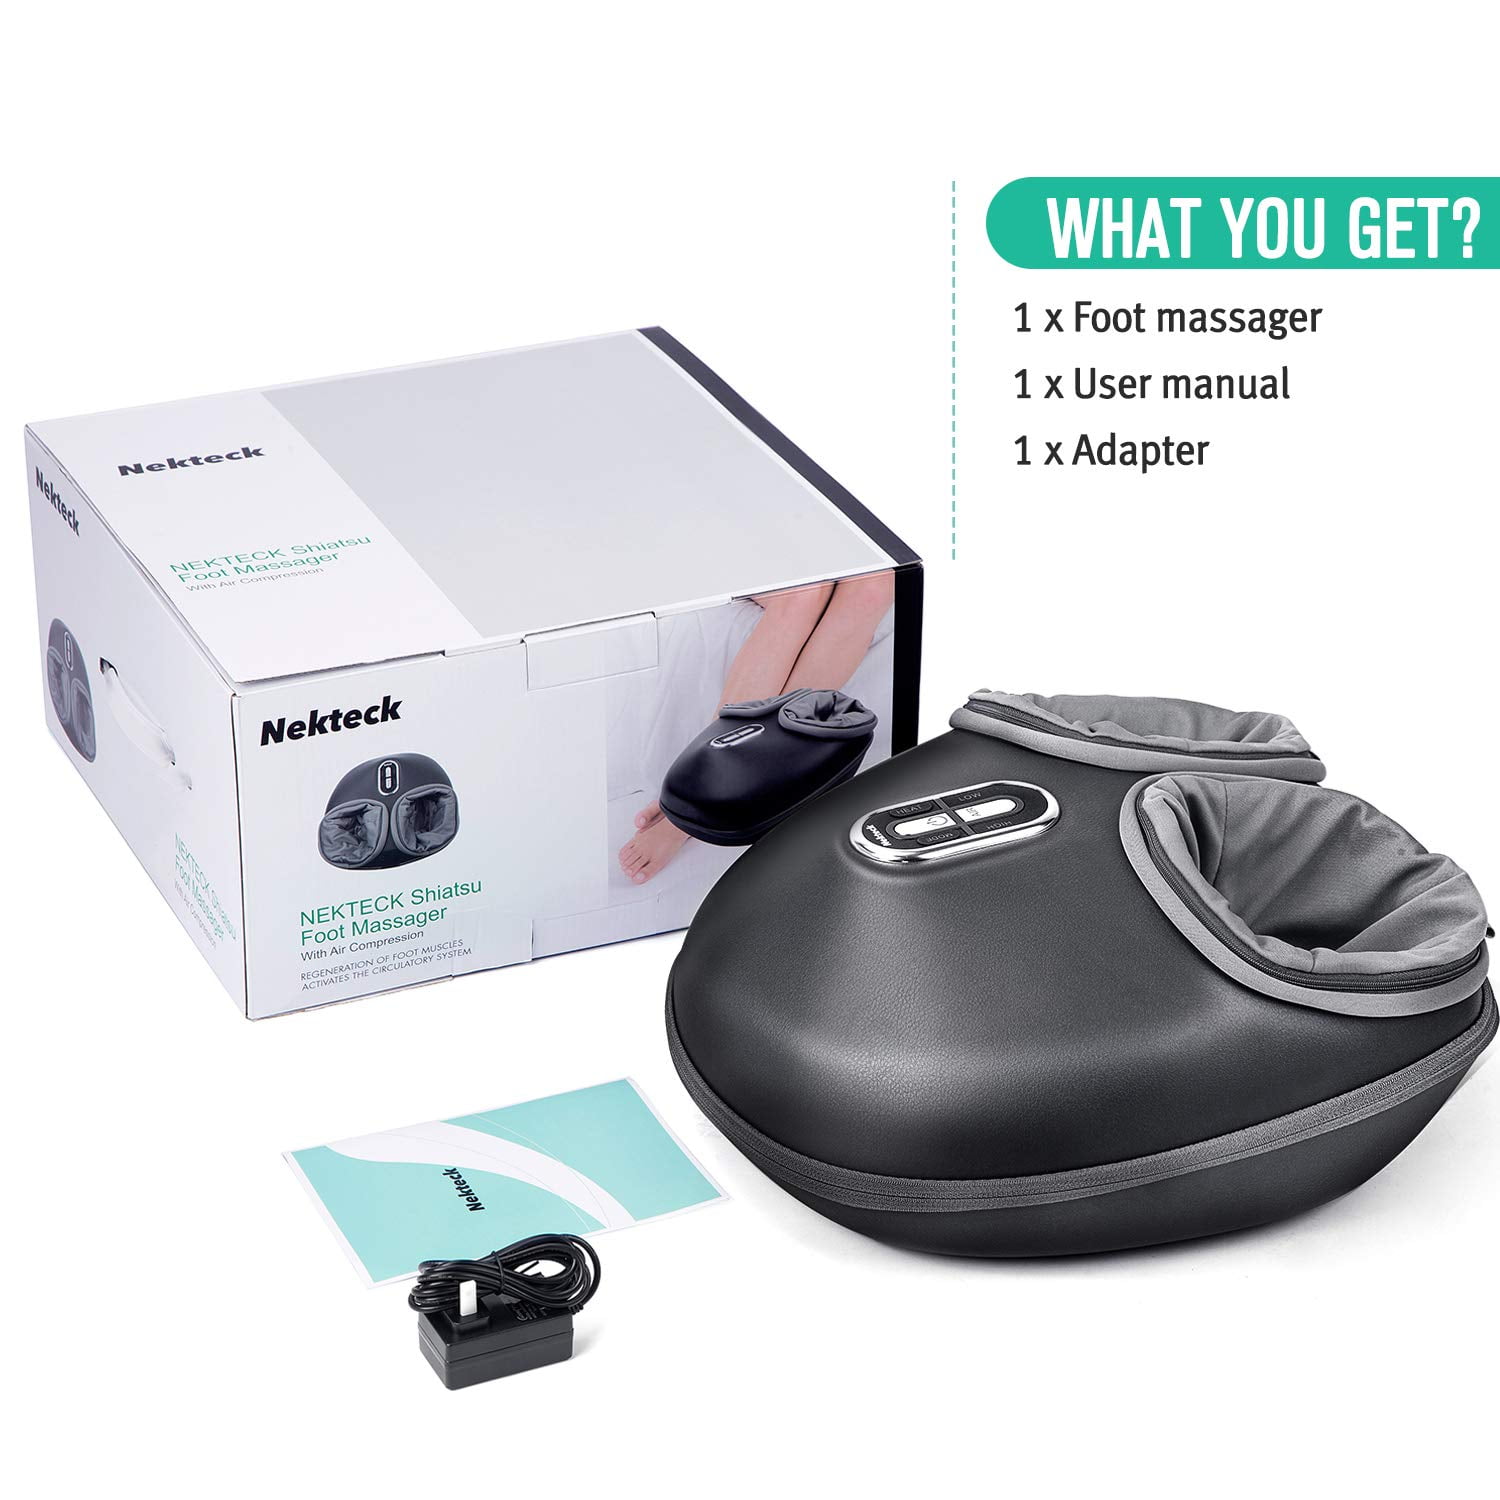 Nekteck Shiatsu Foot Massager Machine - health and beauty - by owner -  household sale - craigslist